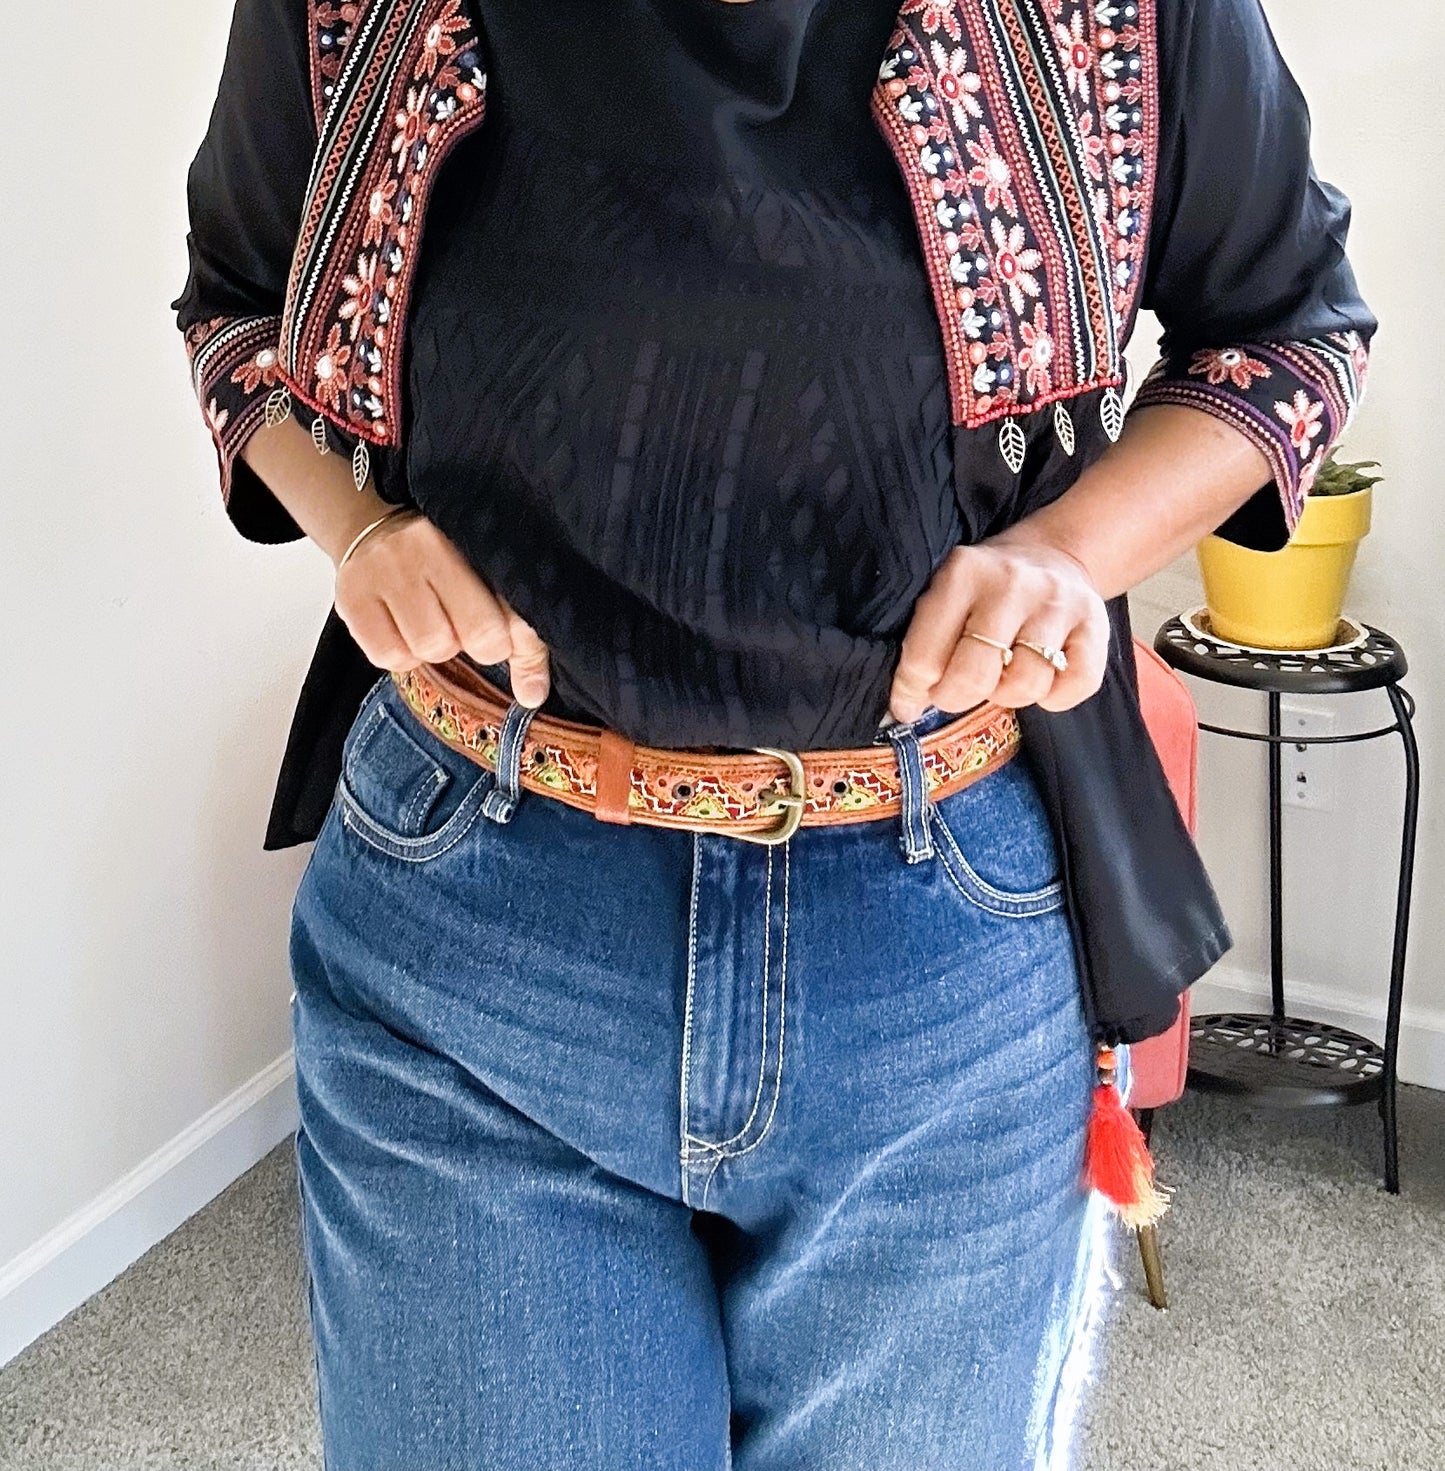 Women Leather Belts - Craft Bazaar